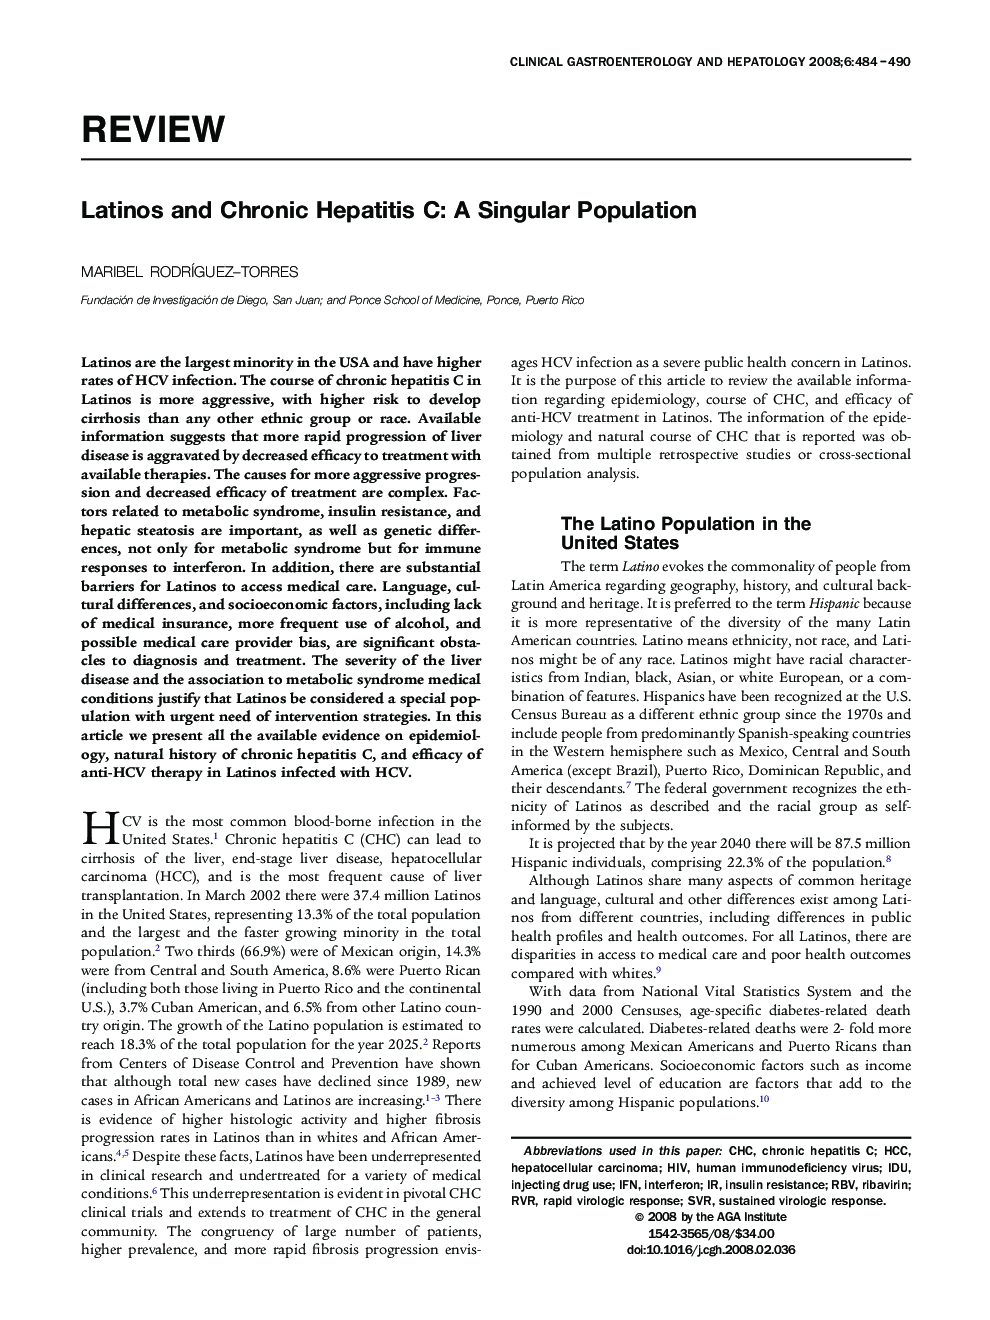 Latinos and Chronic Hepatitis C: A Singular Population